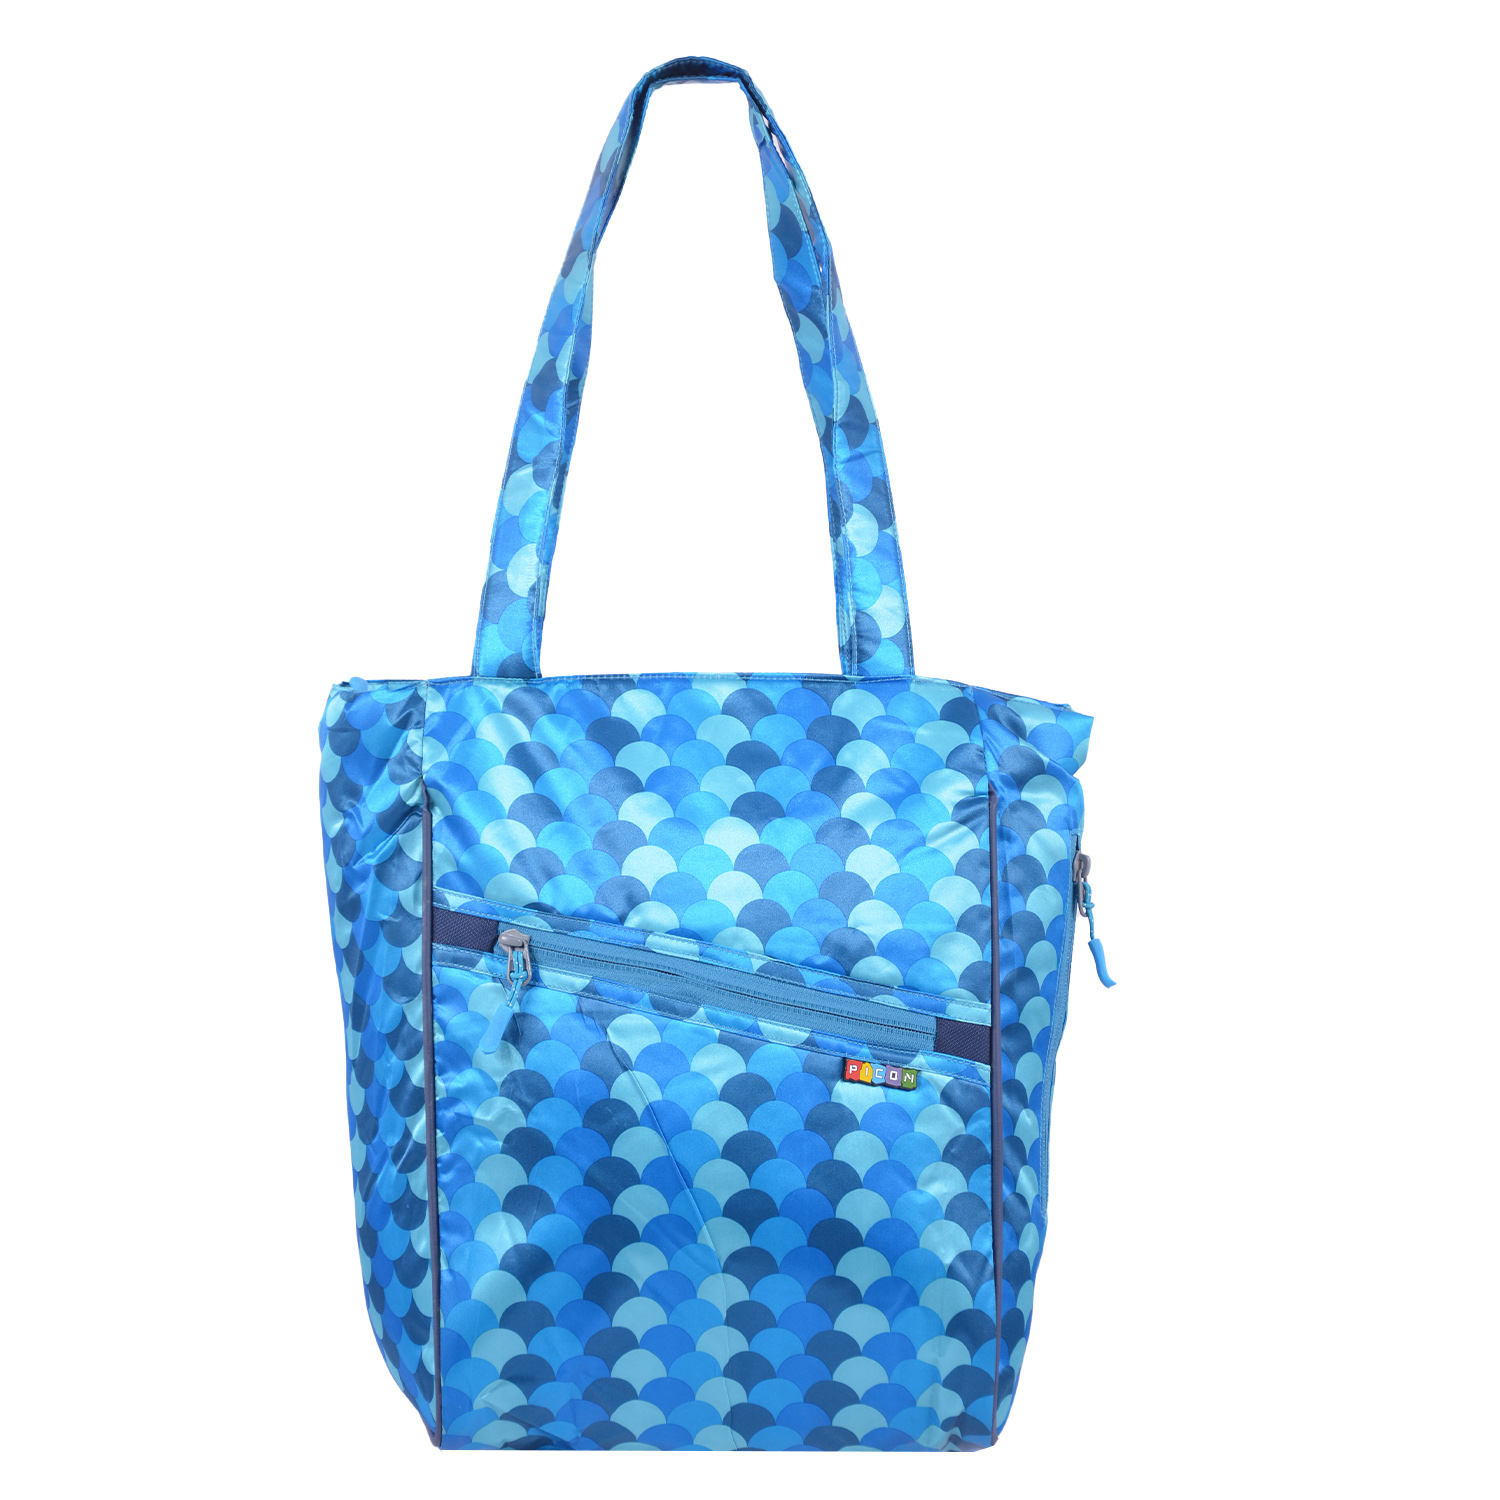 RoshanBags_WOMEN SHOPPING BAG A0327 BLUE